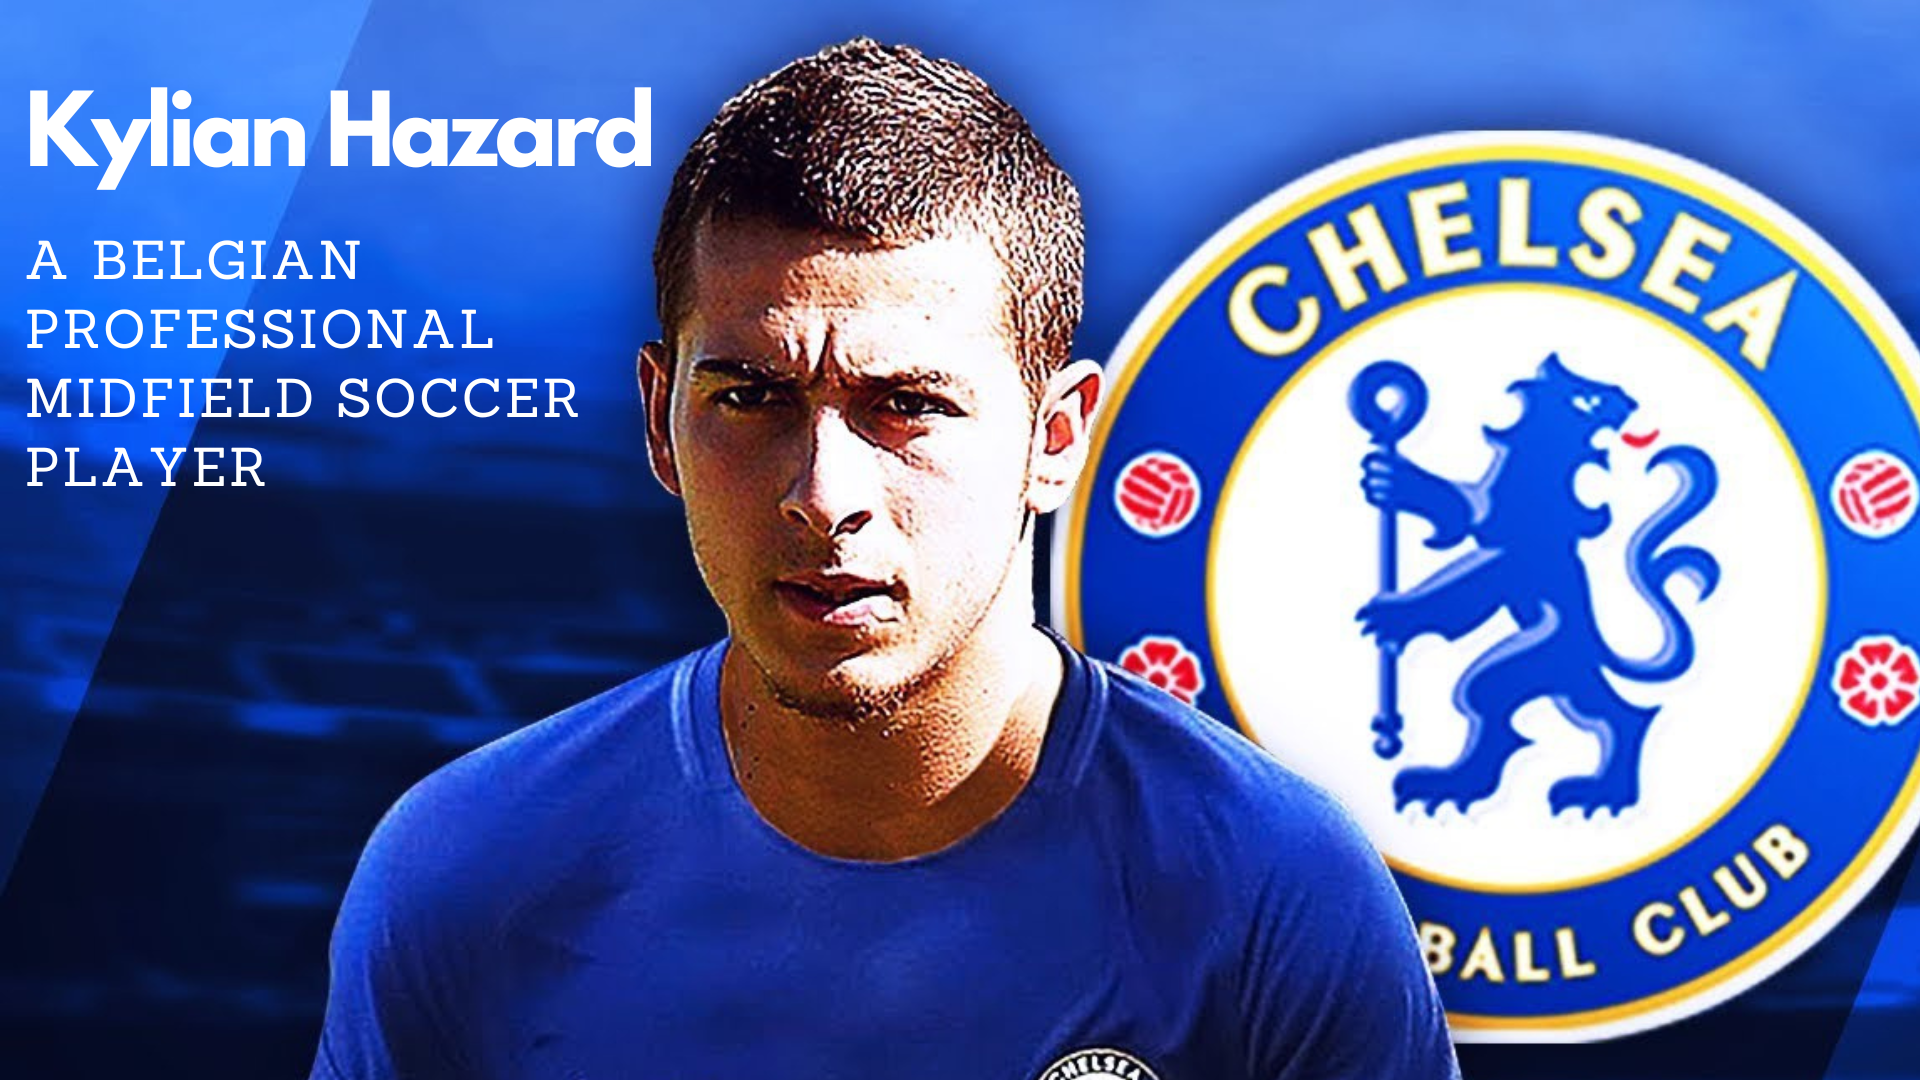 Kylian Hazard - A Belgian Professional Midfield Soccer Player